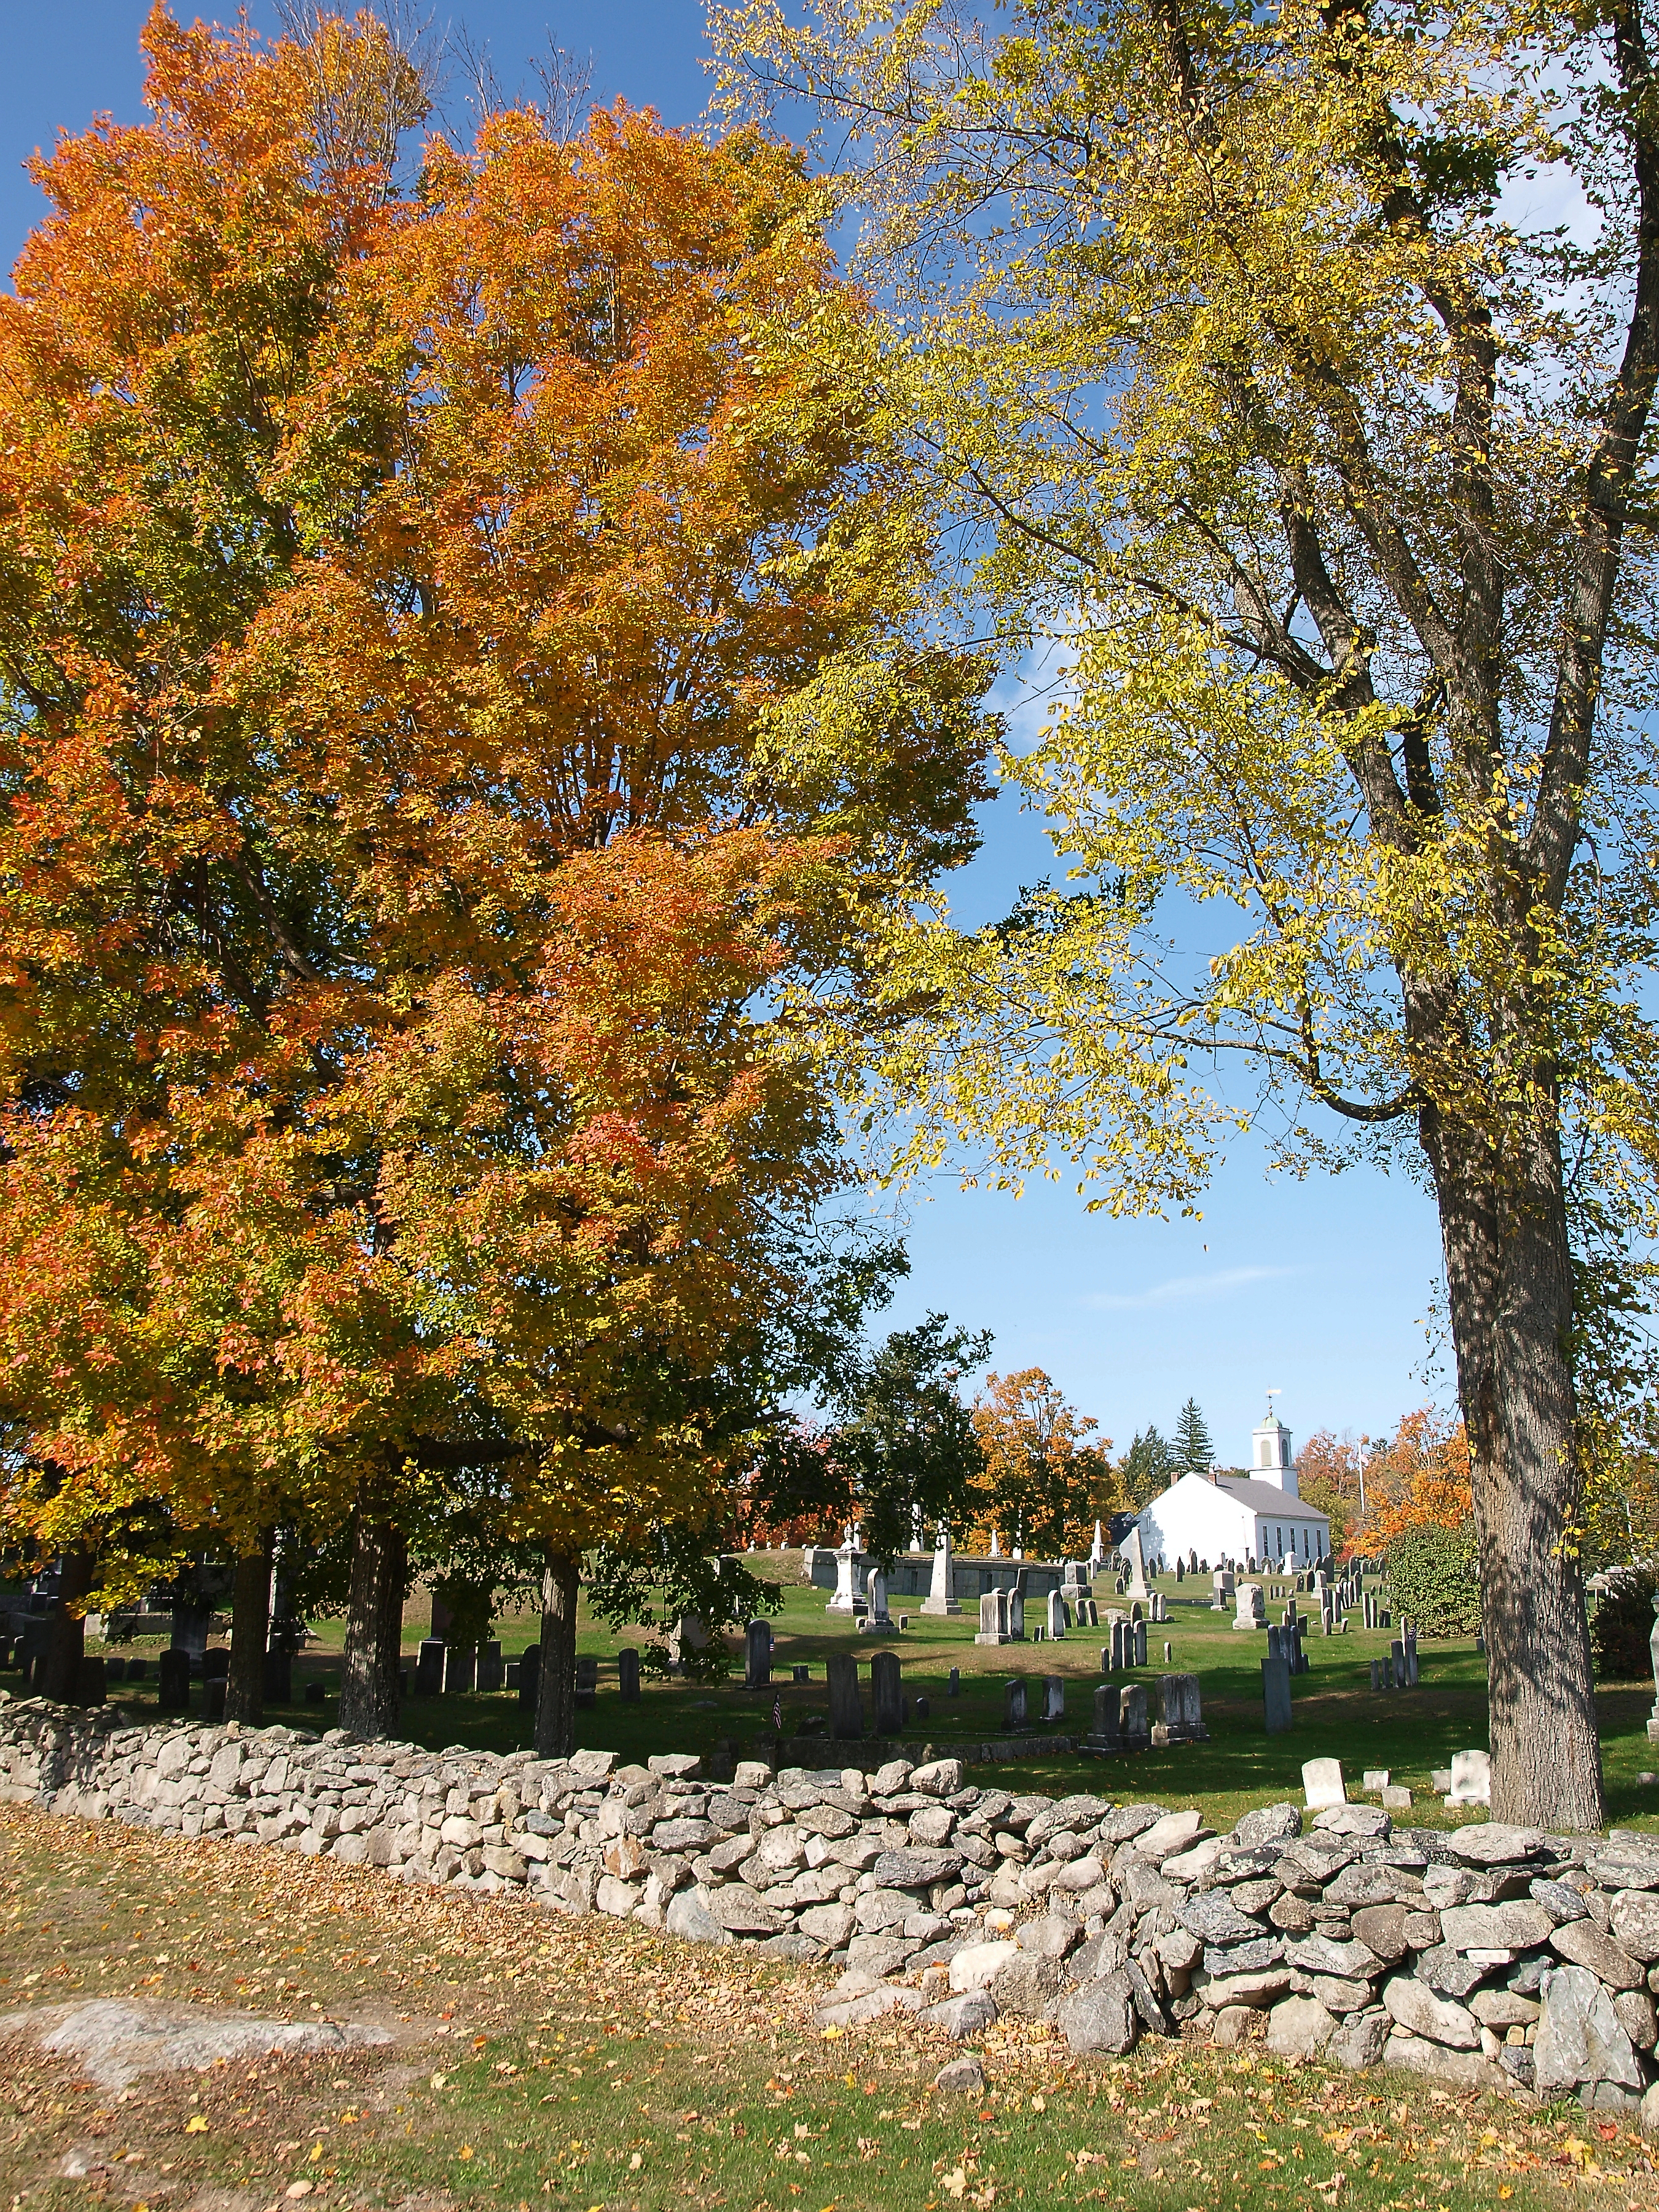 Harvard graveyard in the fall #2